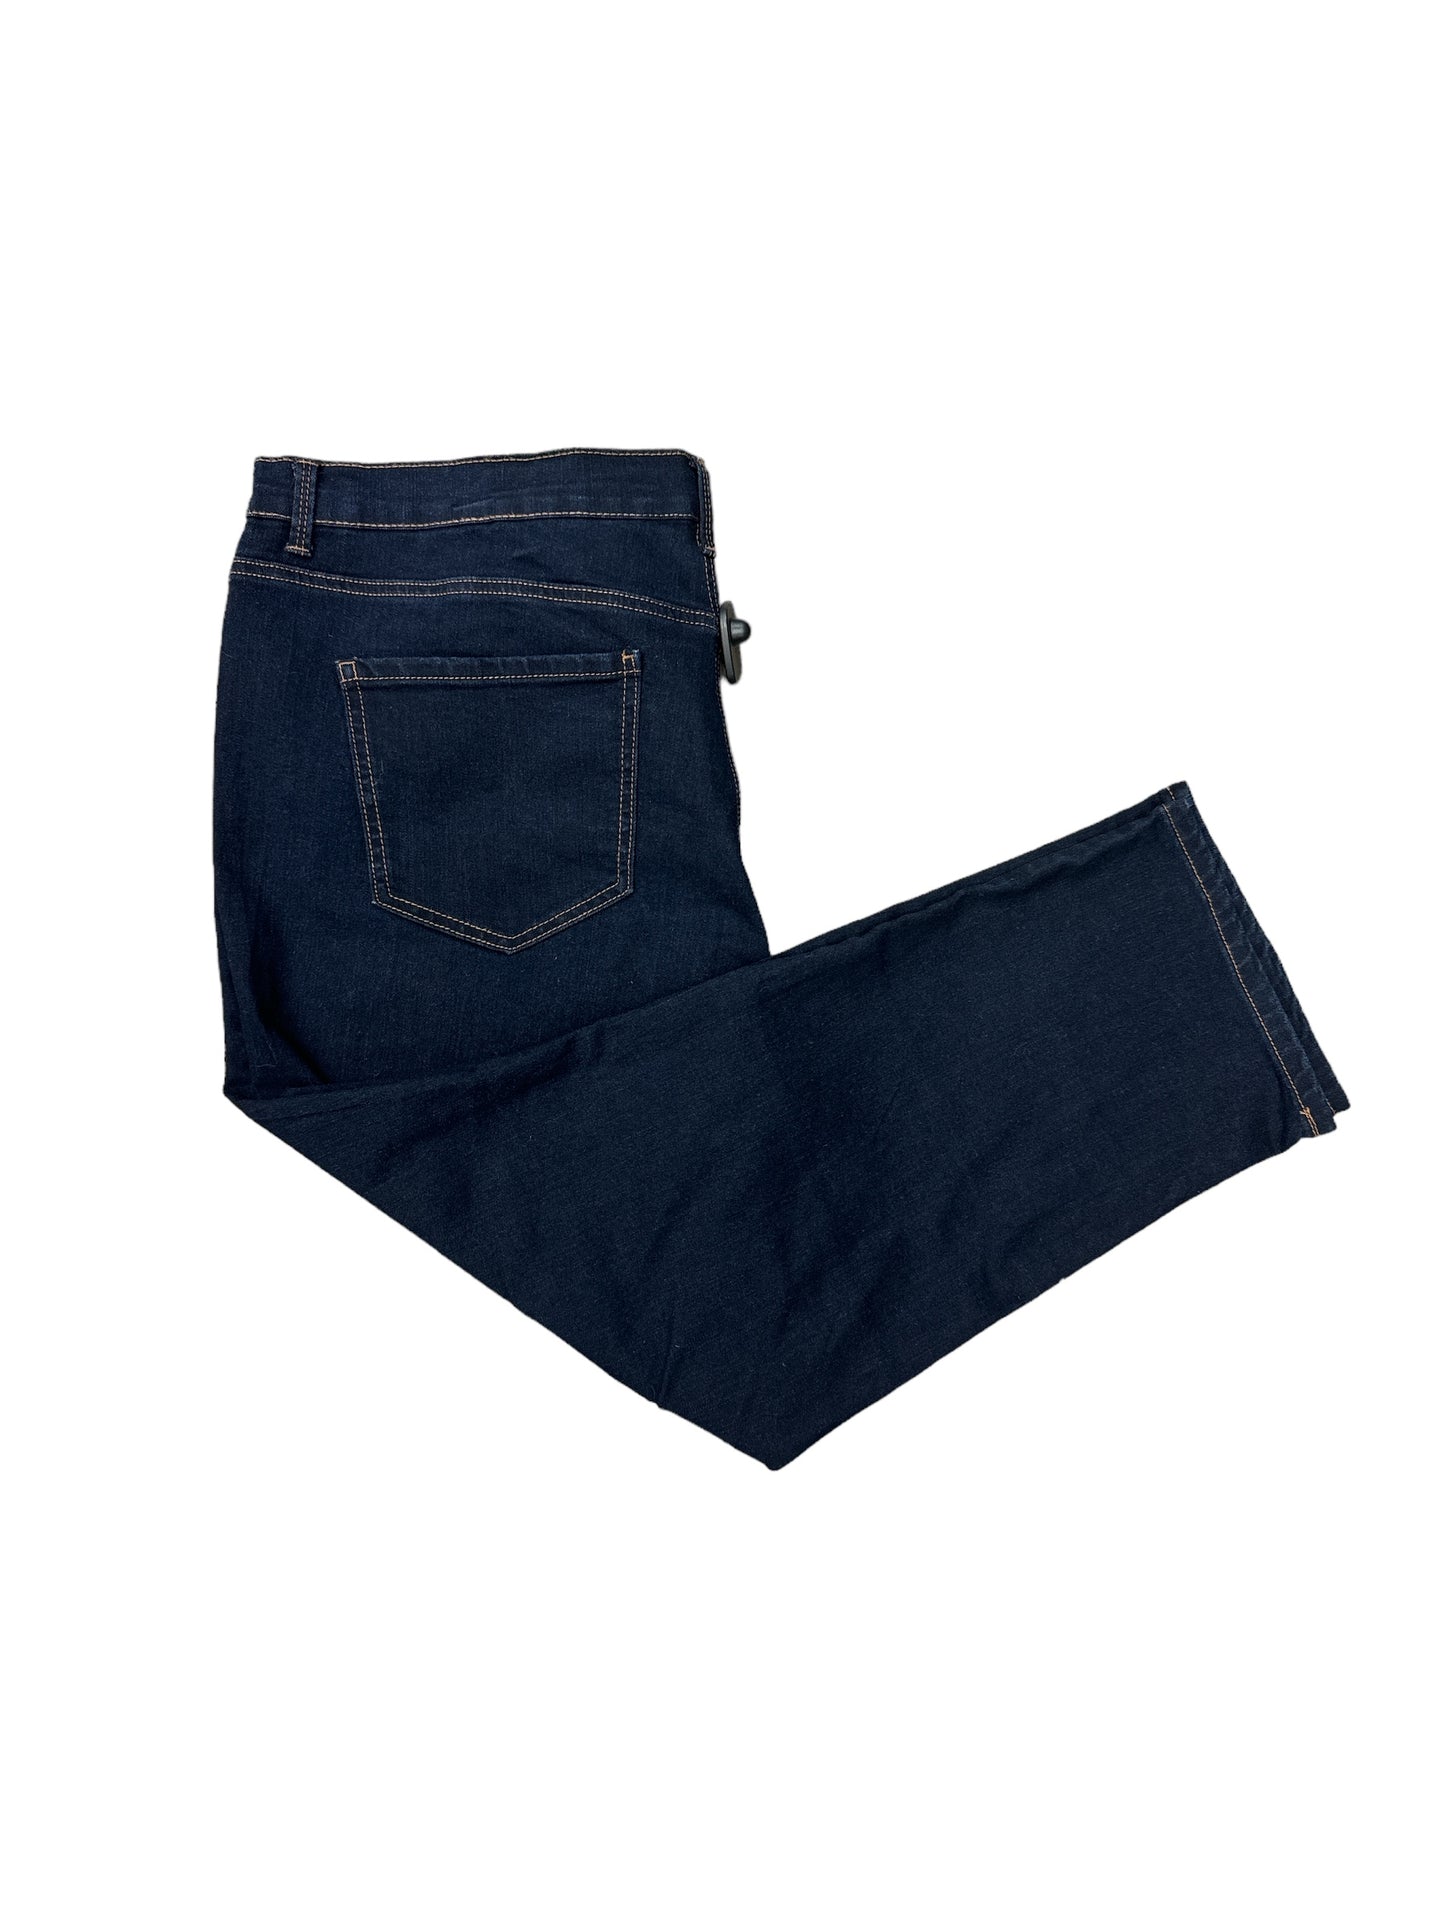 Jeans Straight By Gloria Vanderbilt  Size: 22